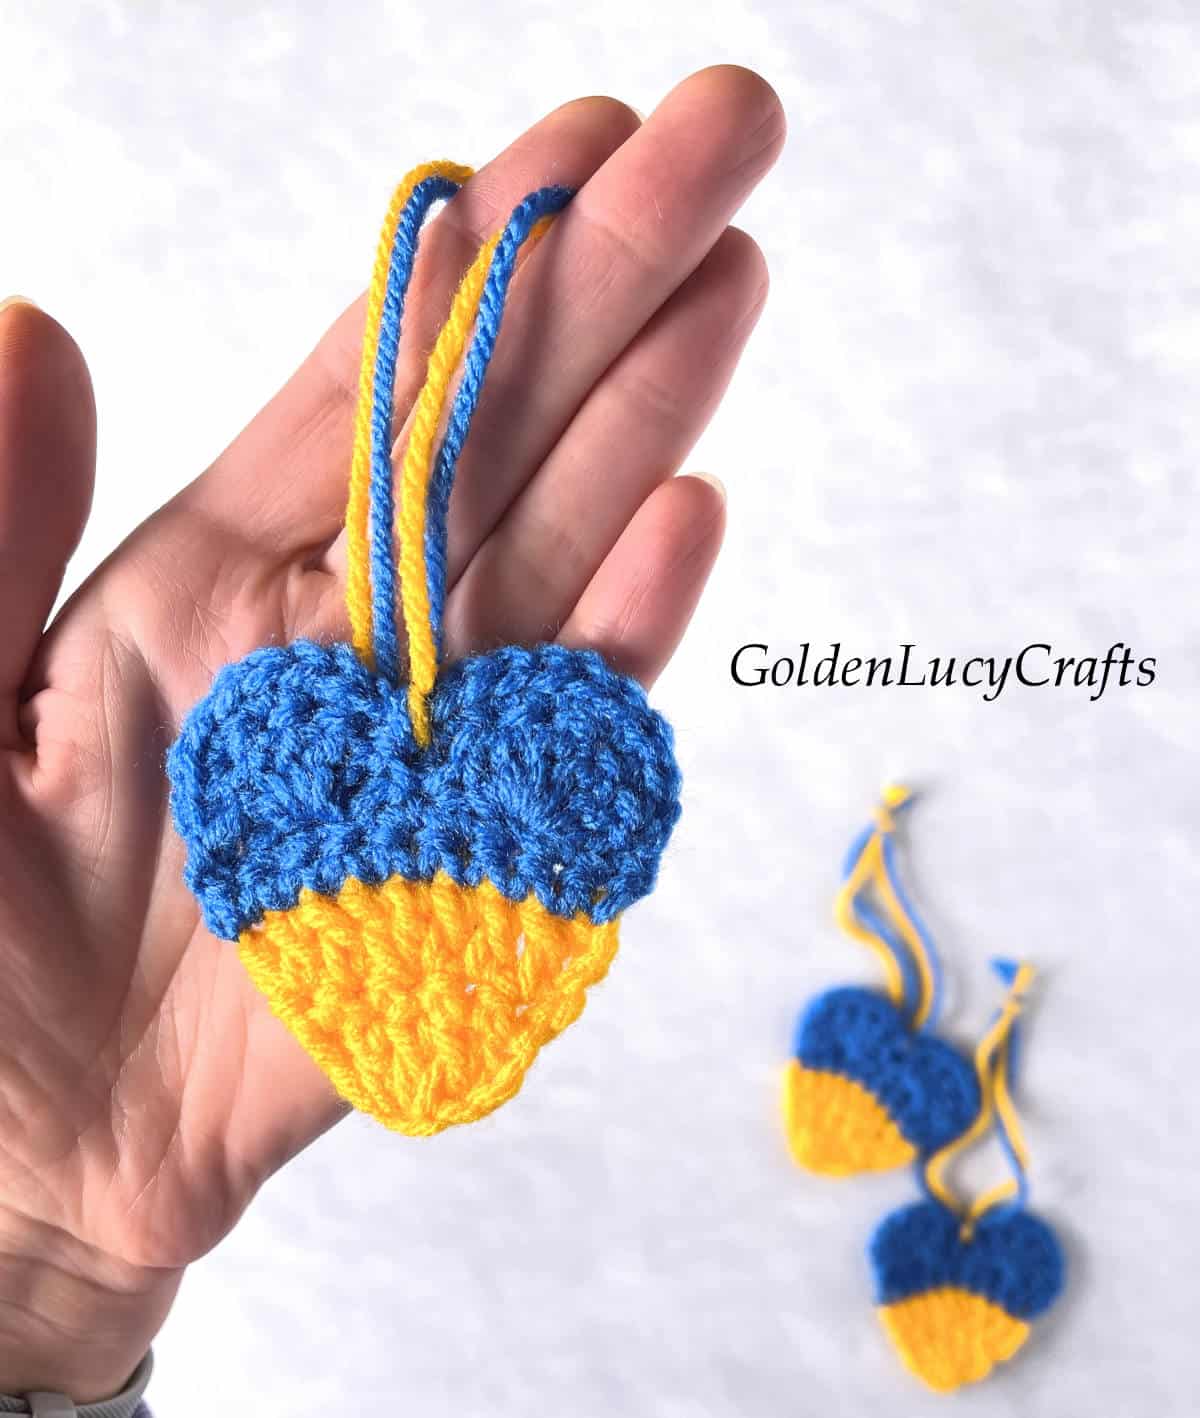 Crochet Ukrainian heart in the palm of a hand.